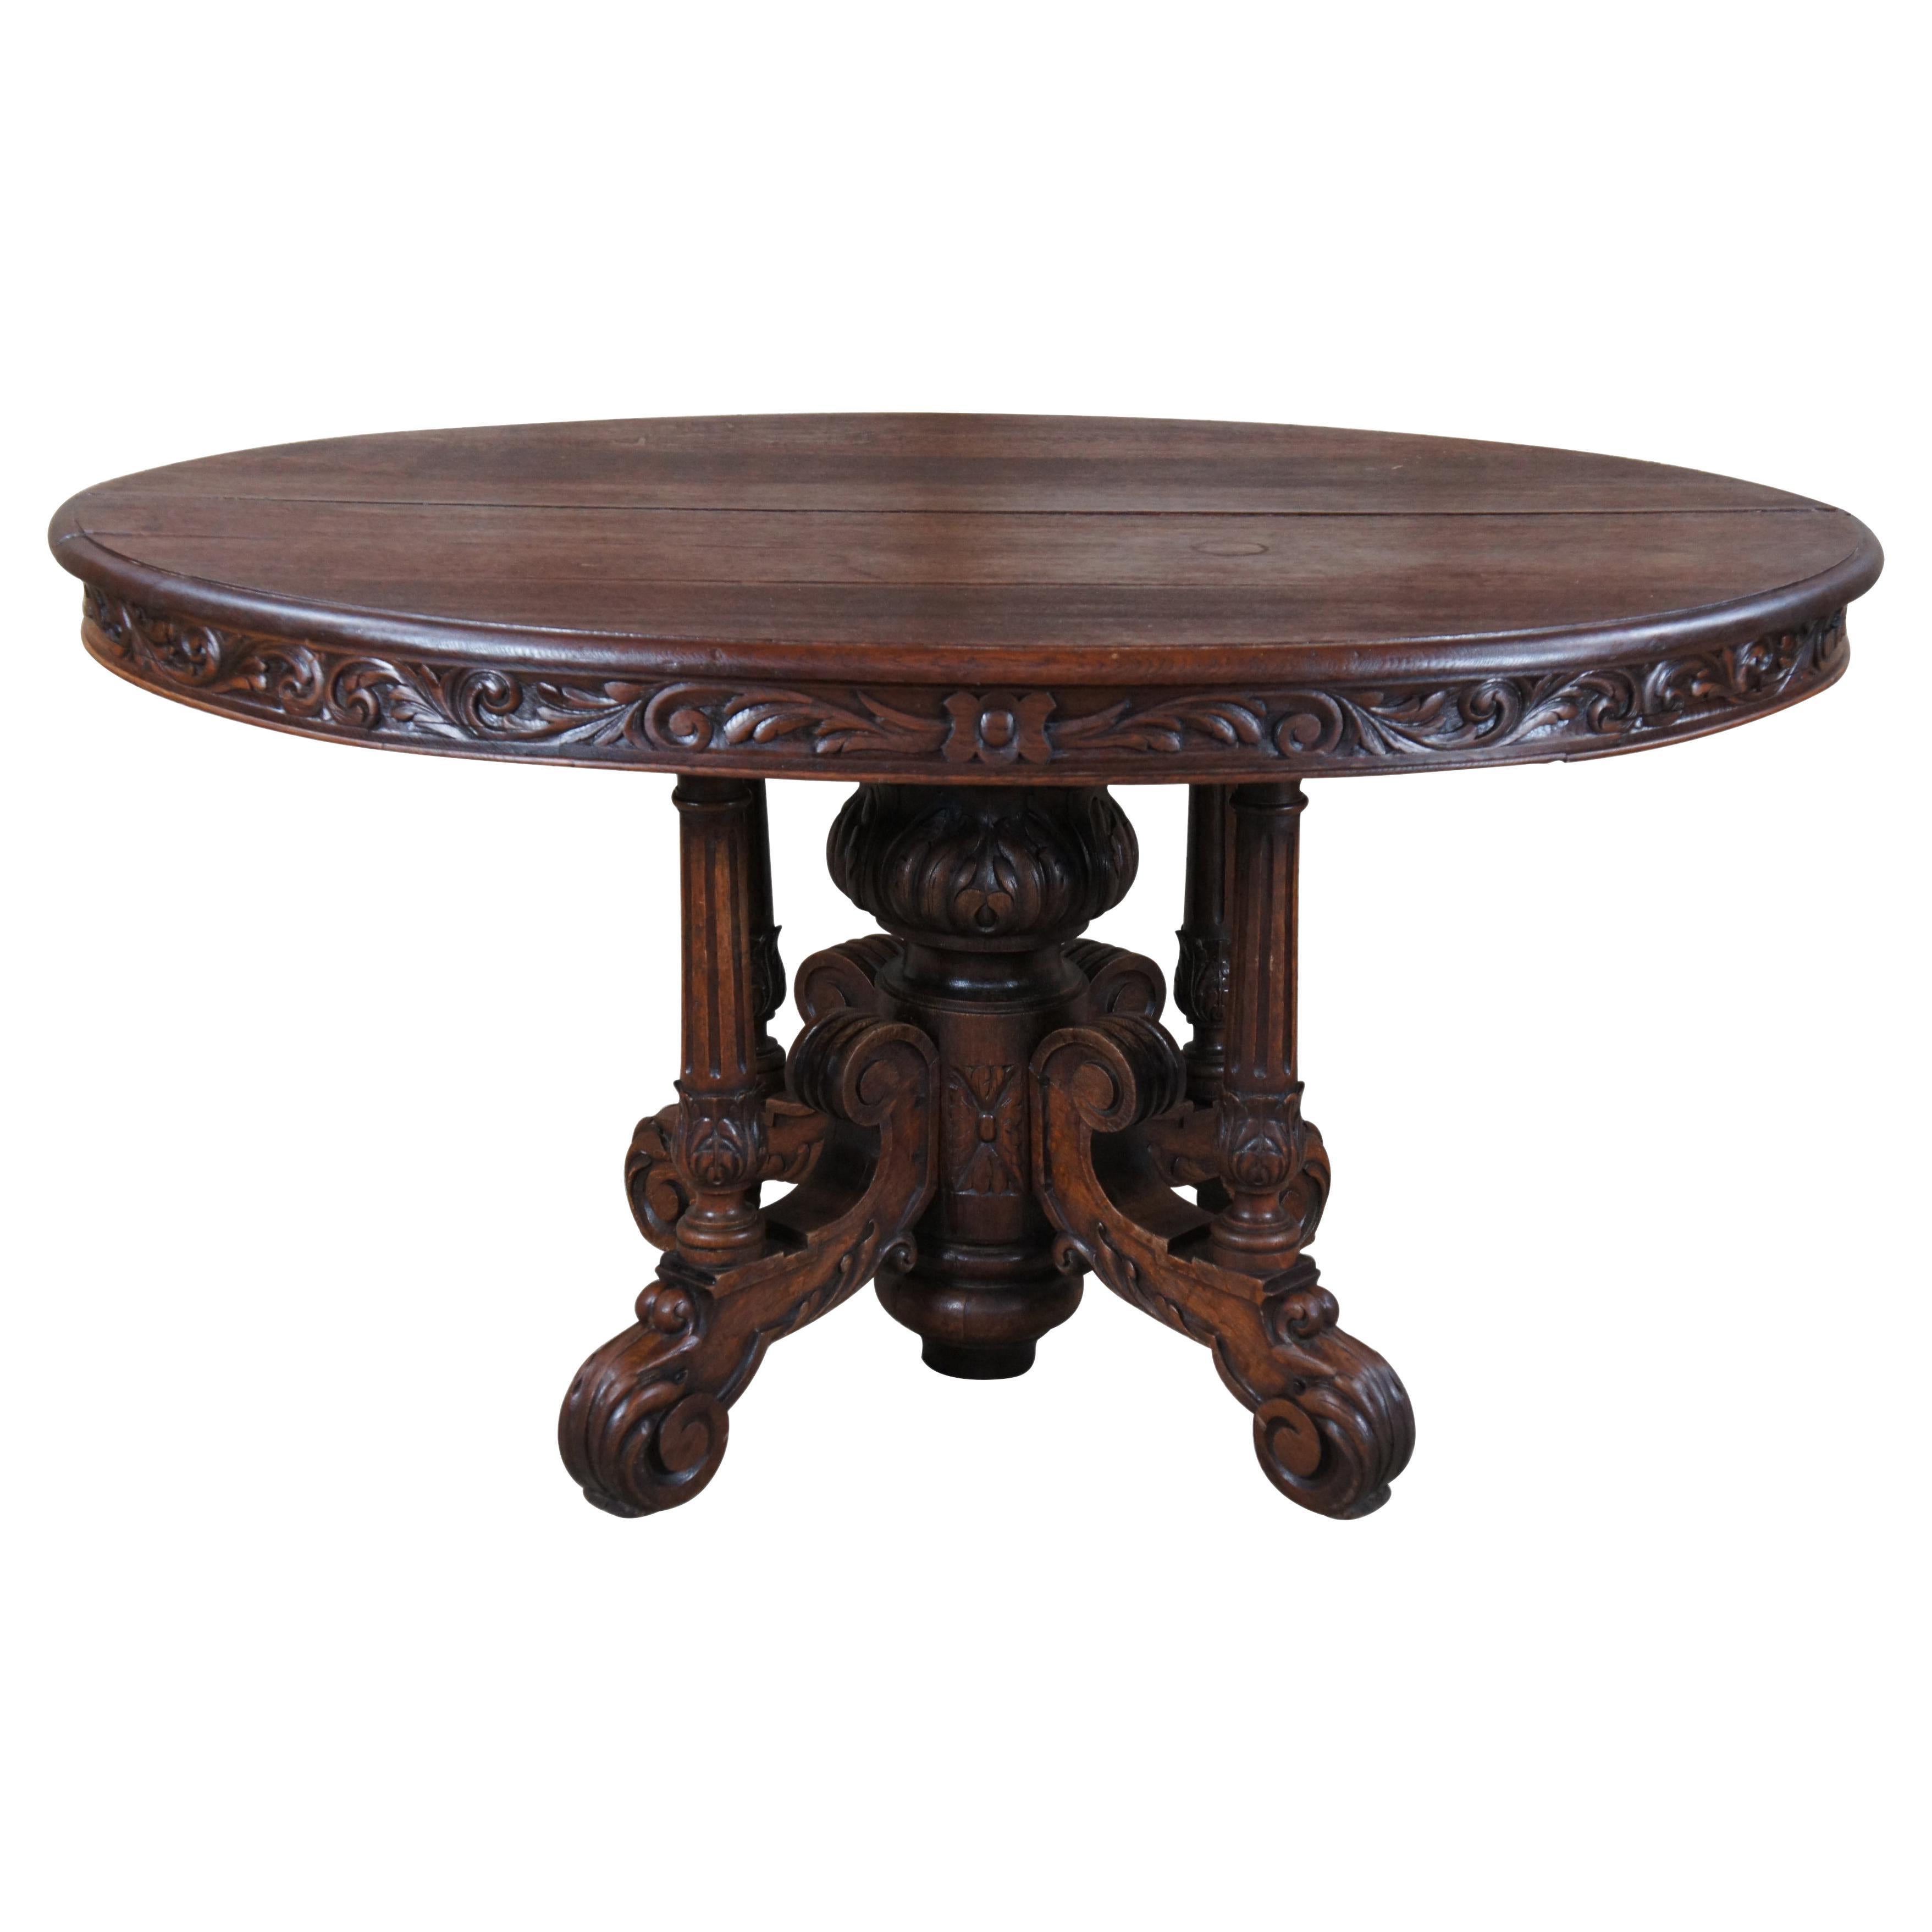 Antique French Renaissance Revival Oval Oak Carved Dining Center or Hunt Table